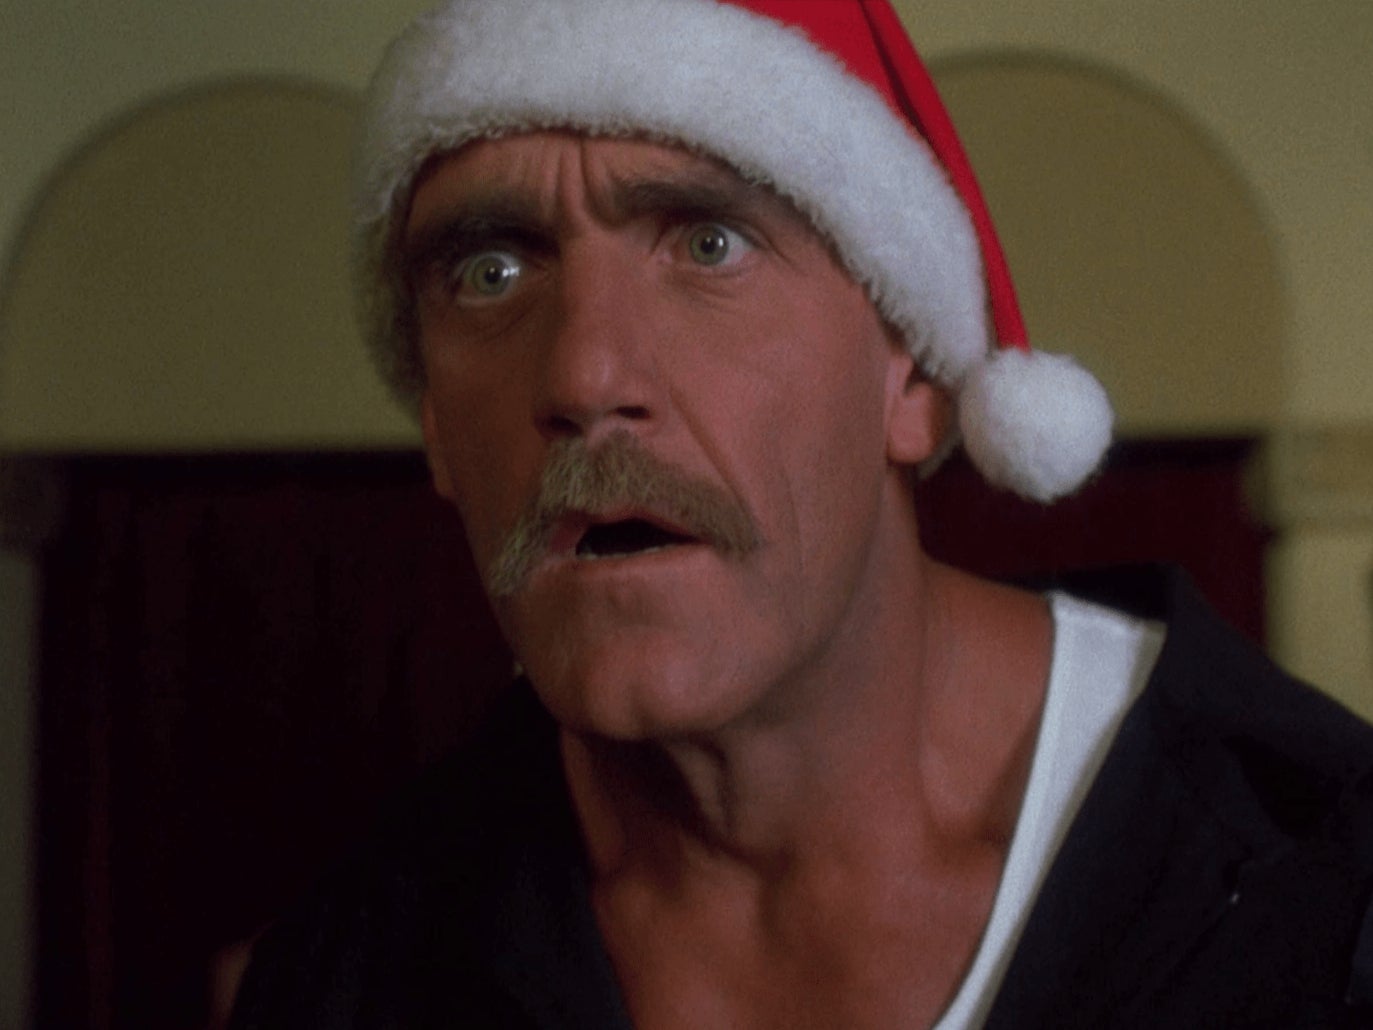 Of course ‘Santa with Muscles’ stars Hulk Hogan